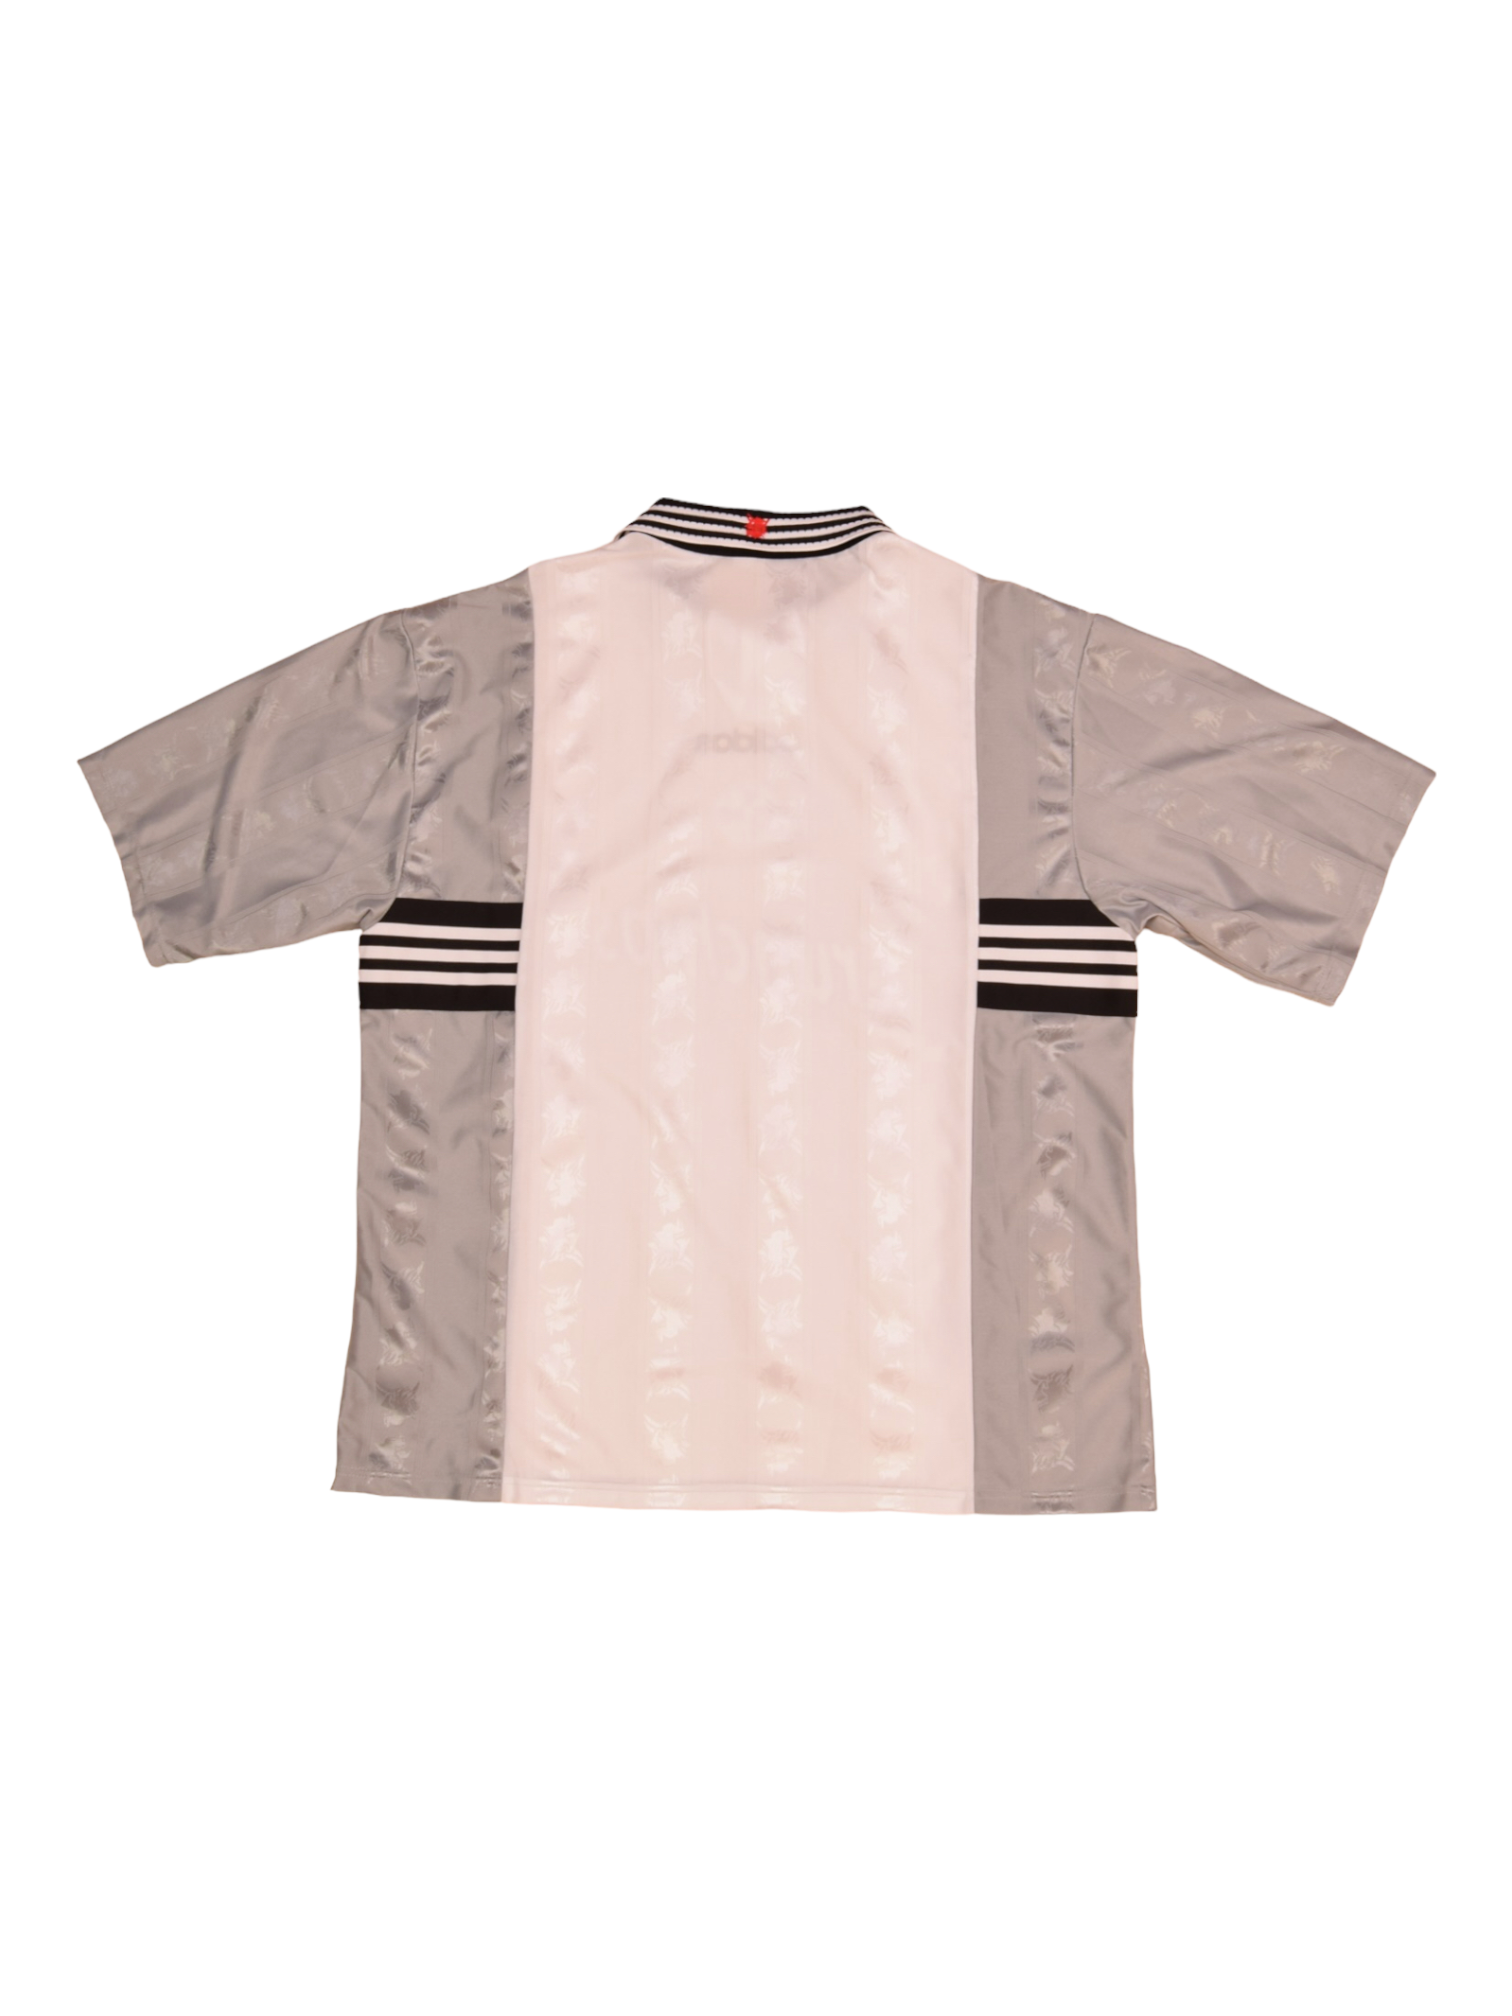 Kaiserslautern FCK Adidas 1996 - 1997 - 1998 Away Football Shirt Grey White Size M Crunchips